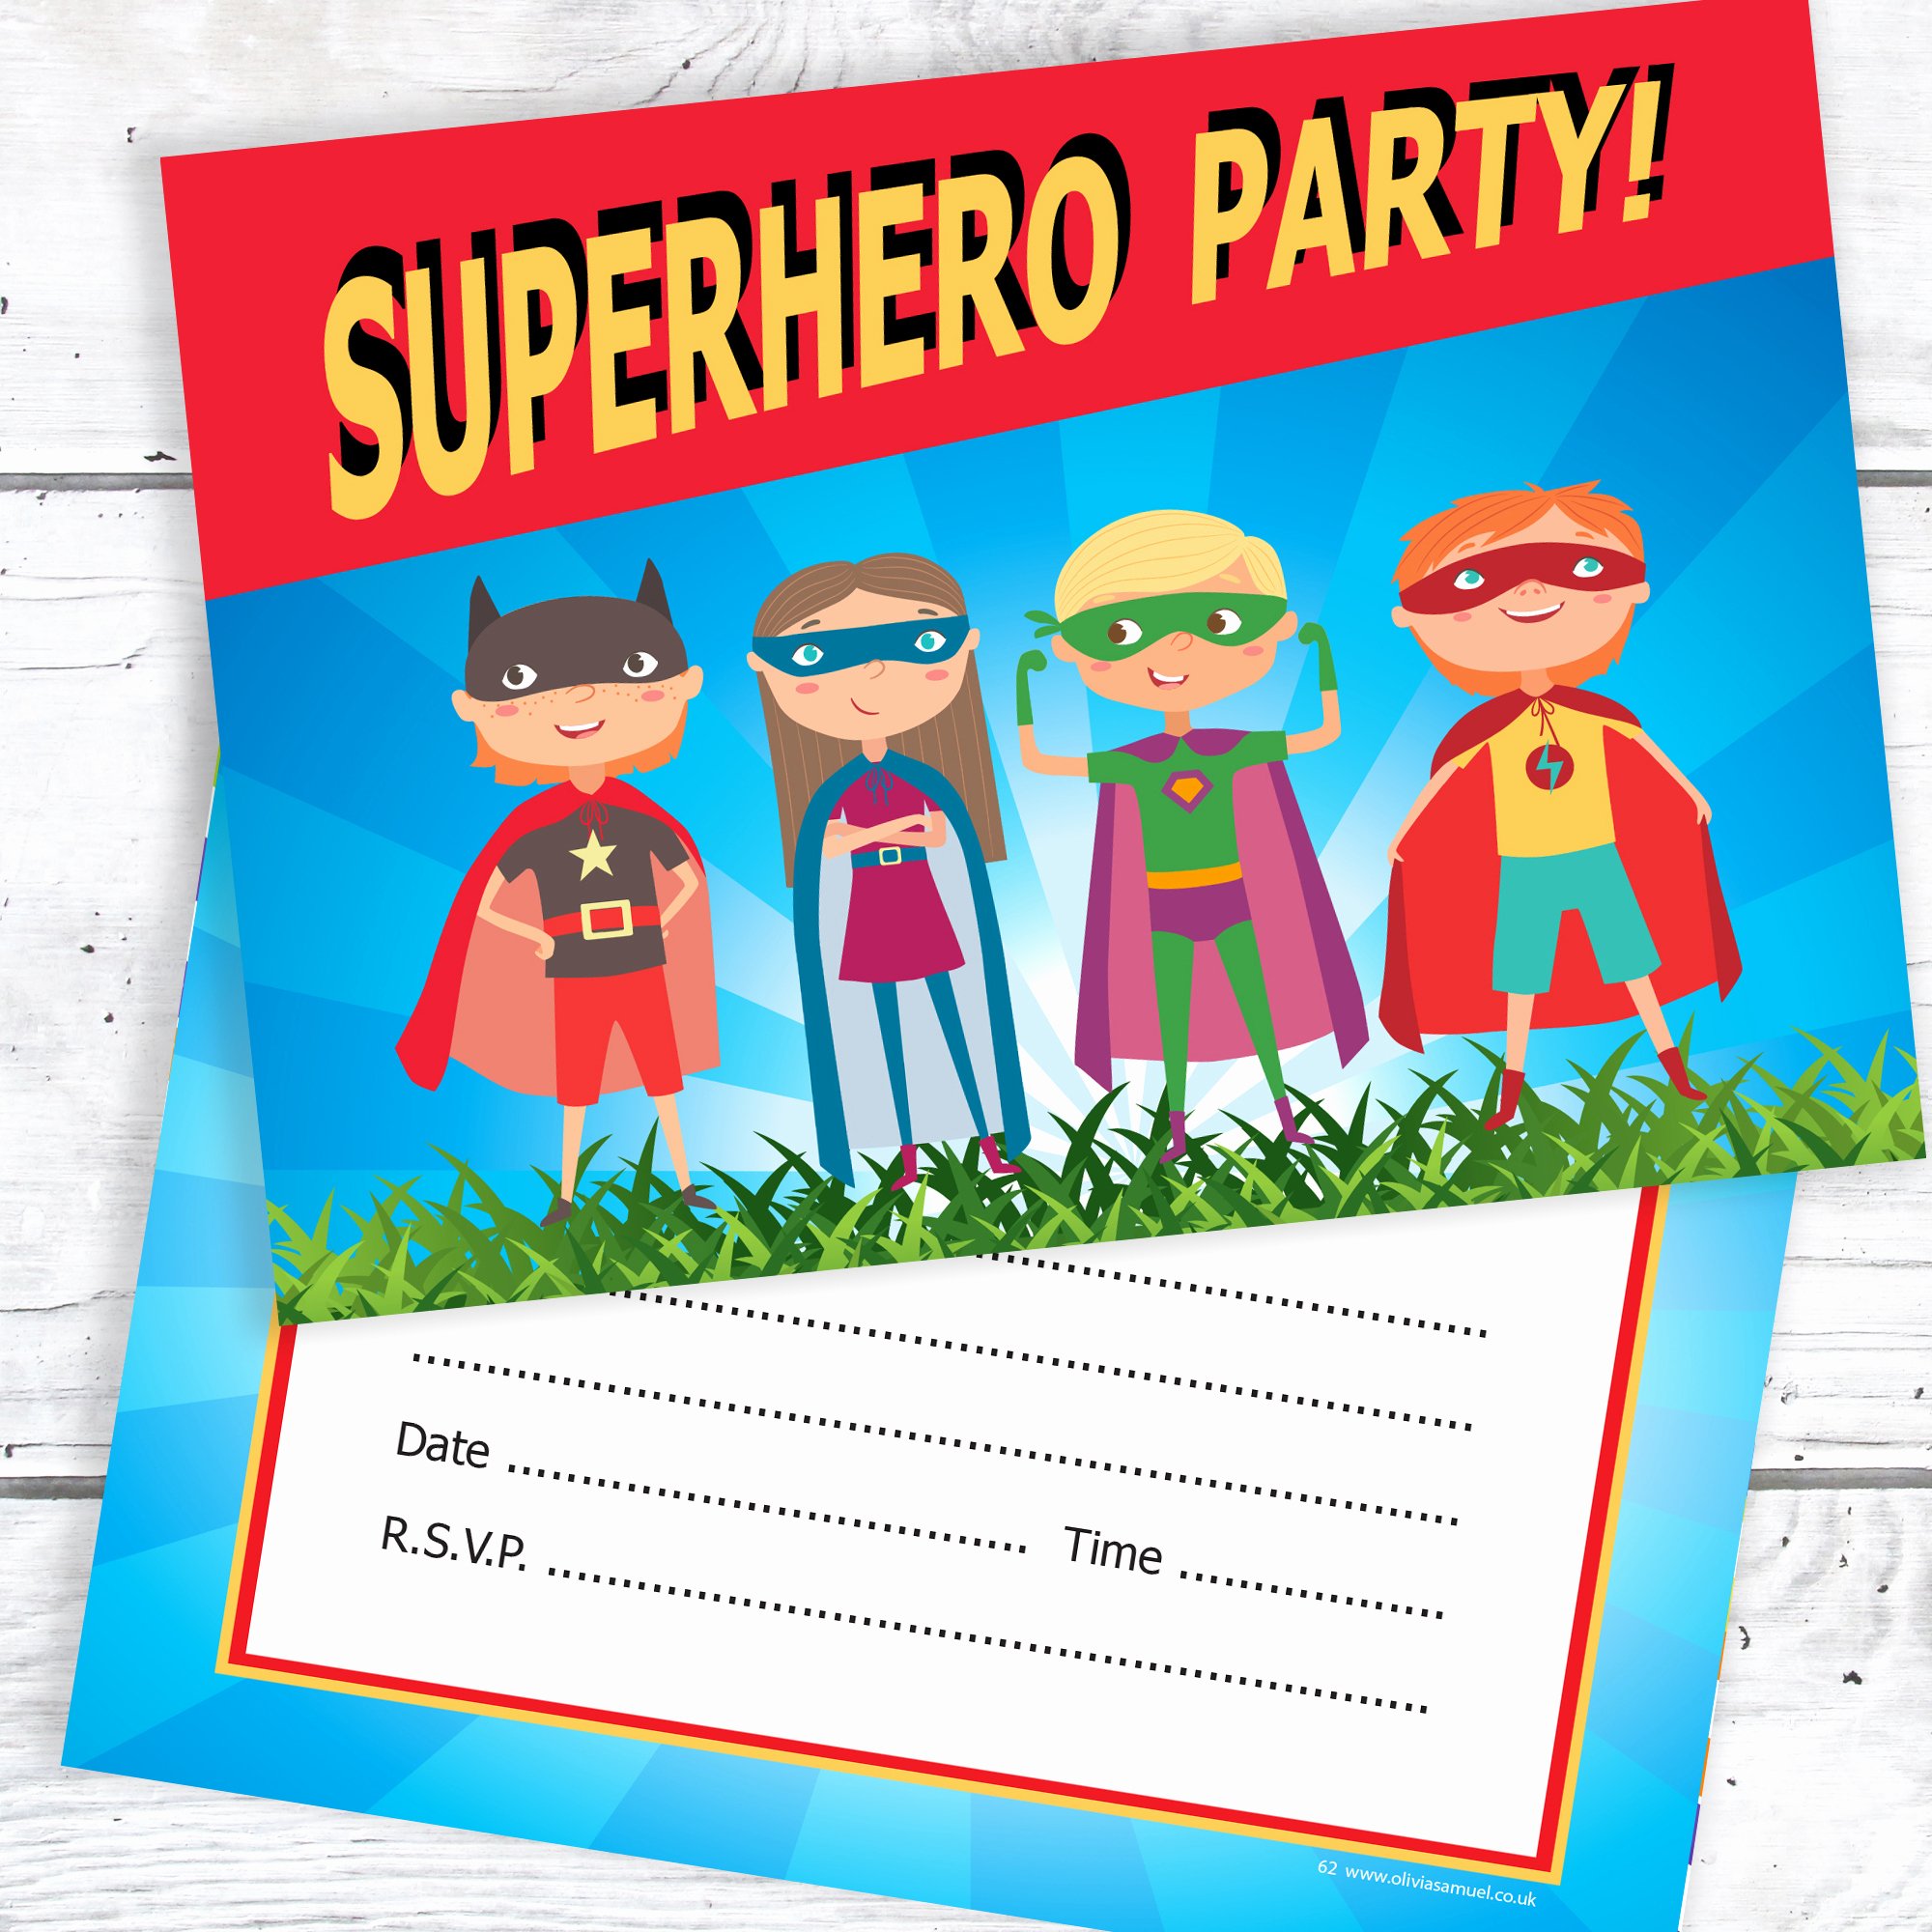 Super Hero Birthday Party Invitations Elegant Superhero Party Invitations – Kids Super Hero Birthday Invites – A6 Postcard Size with Envelopes